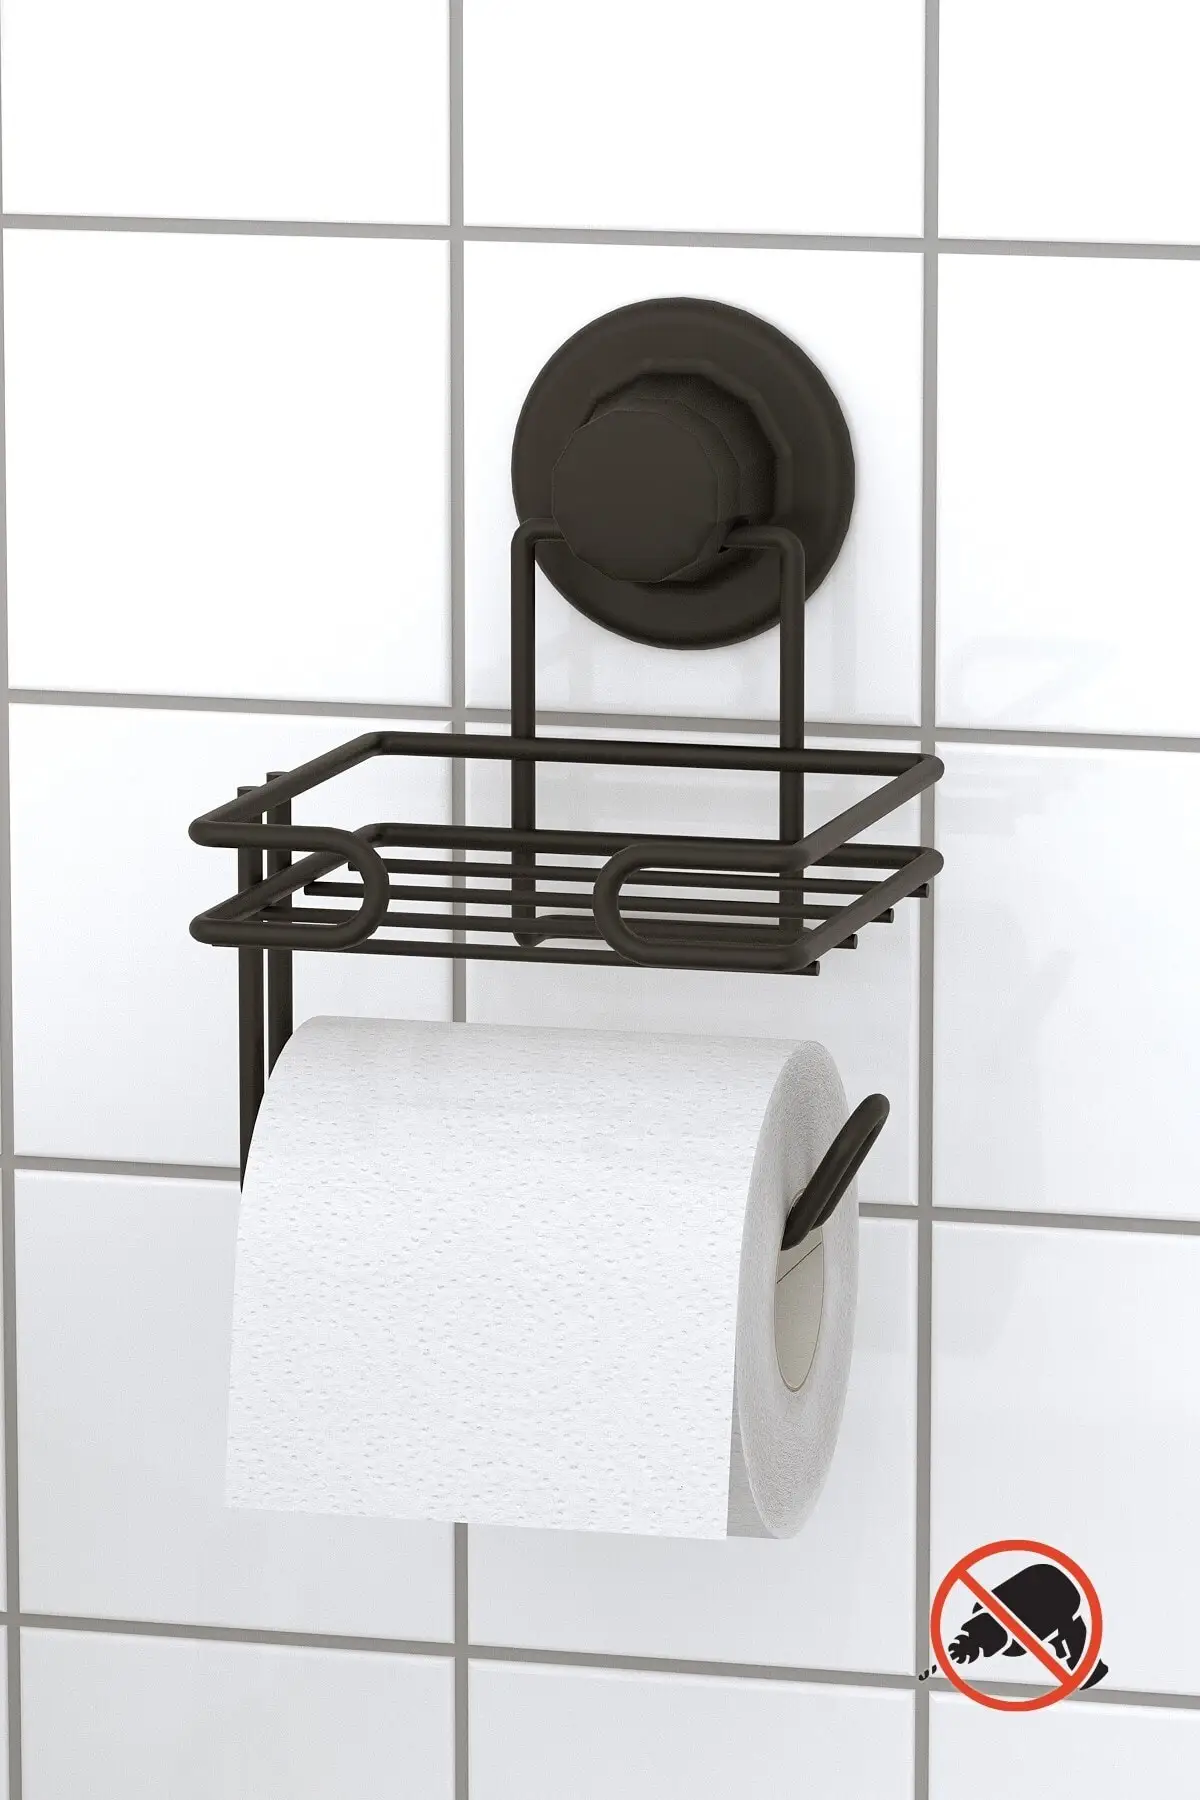 

Matte Black Vacuum Redundant Toilet Sheet Dm275